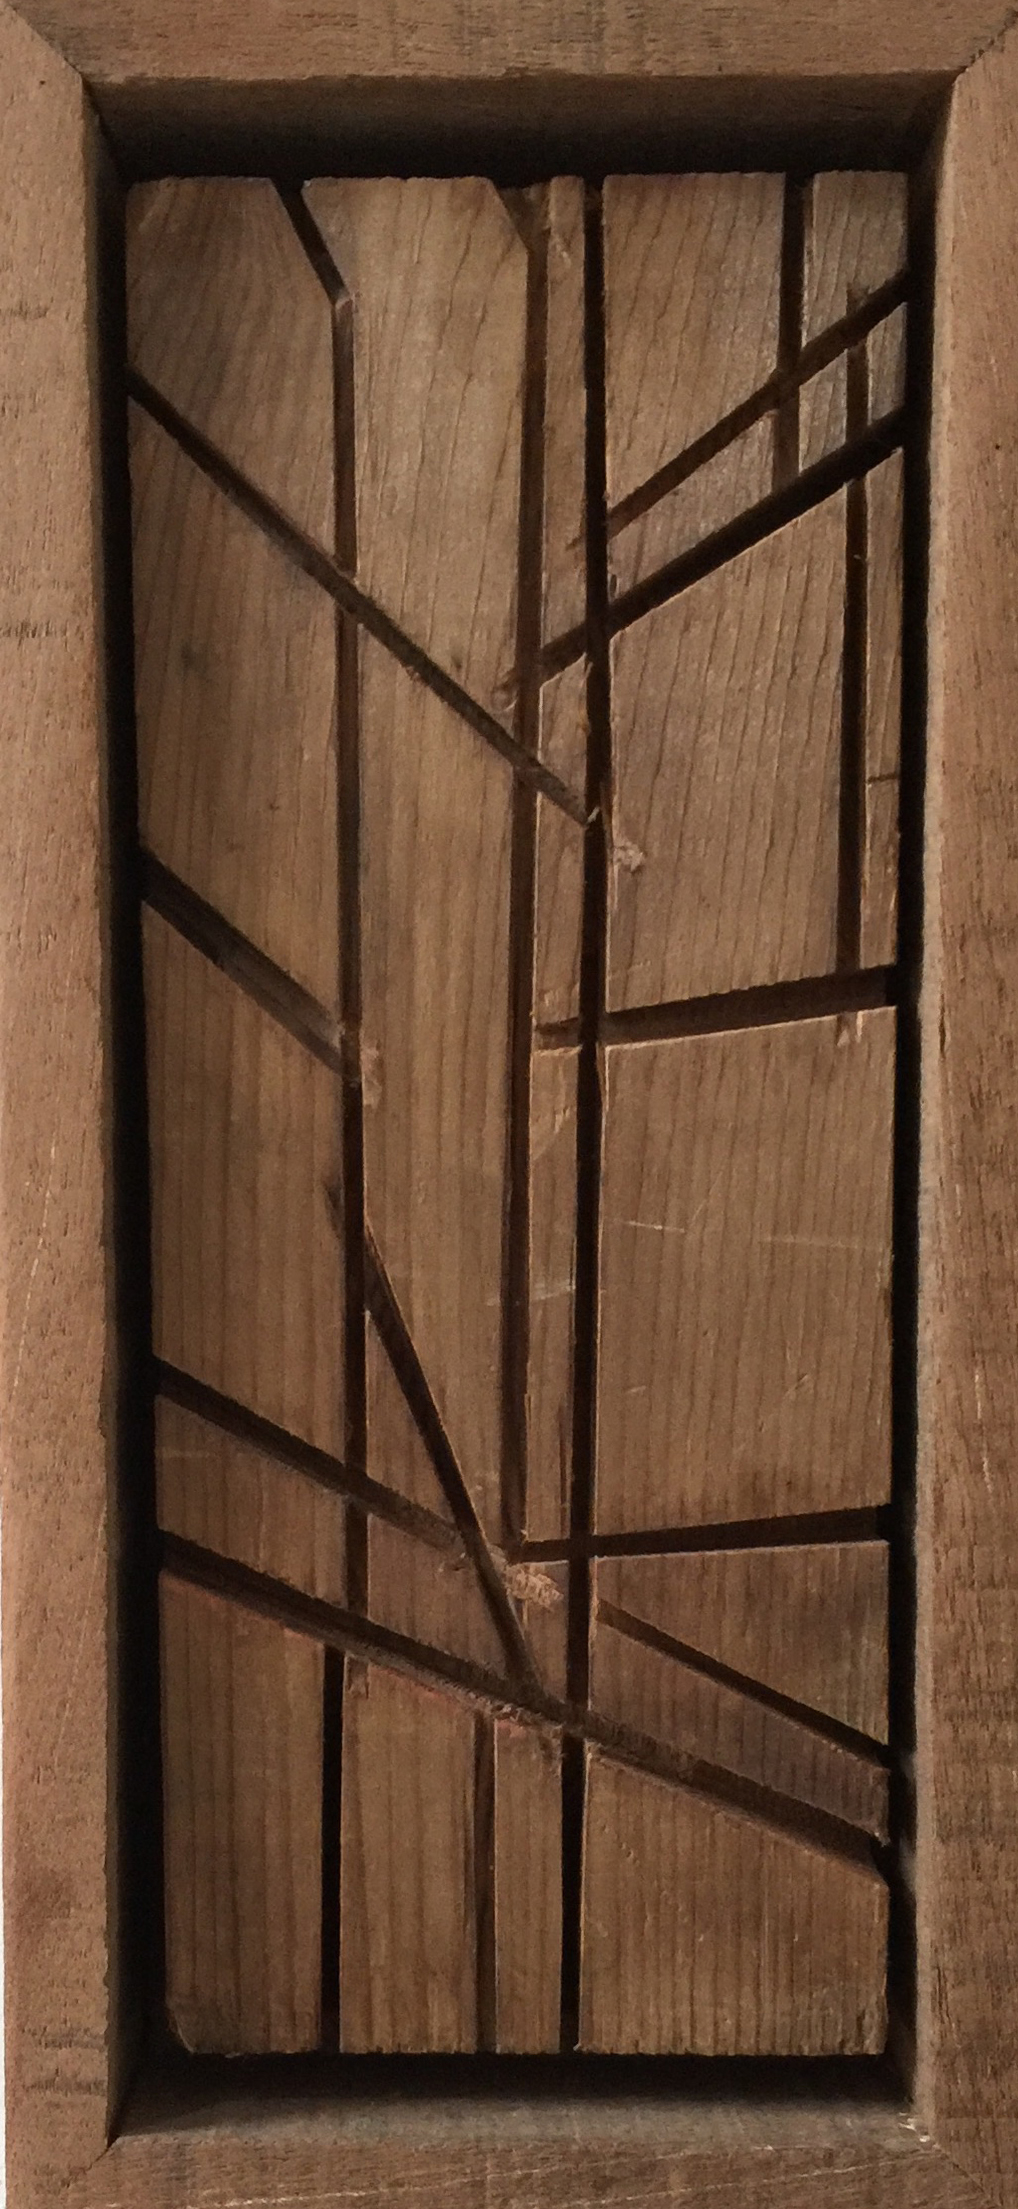 Composition in Cedar, 2016, incised reclaimed lumber, 5 x 11 in, $800